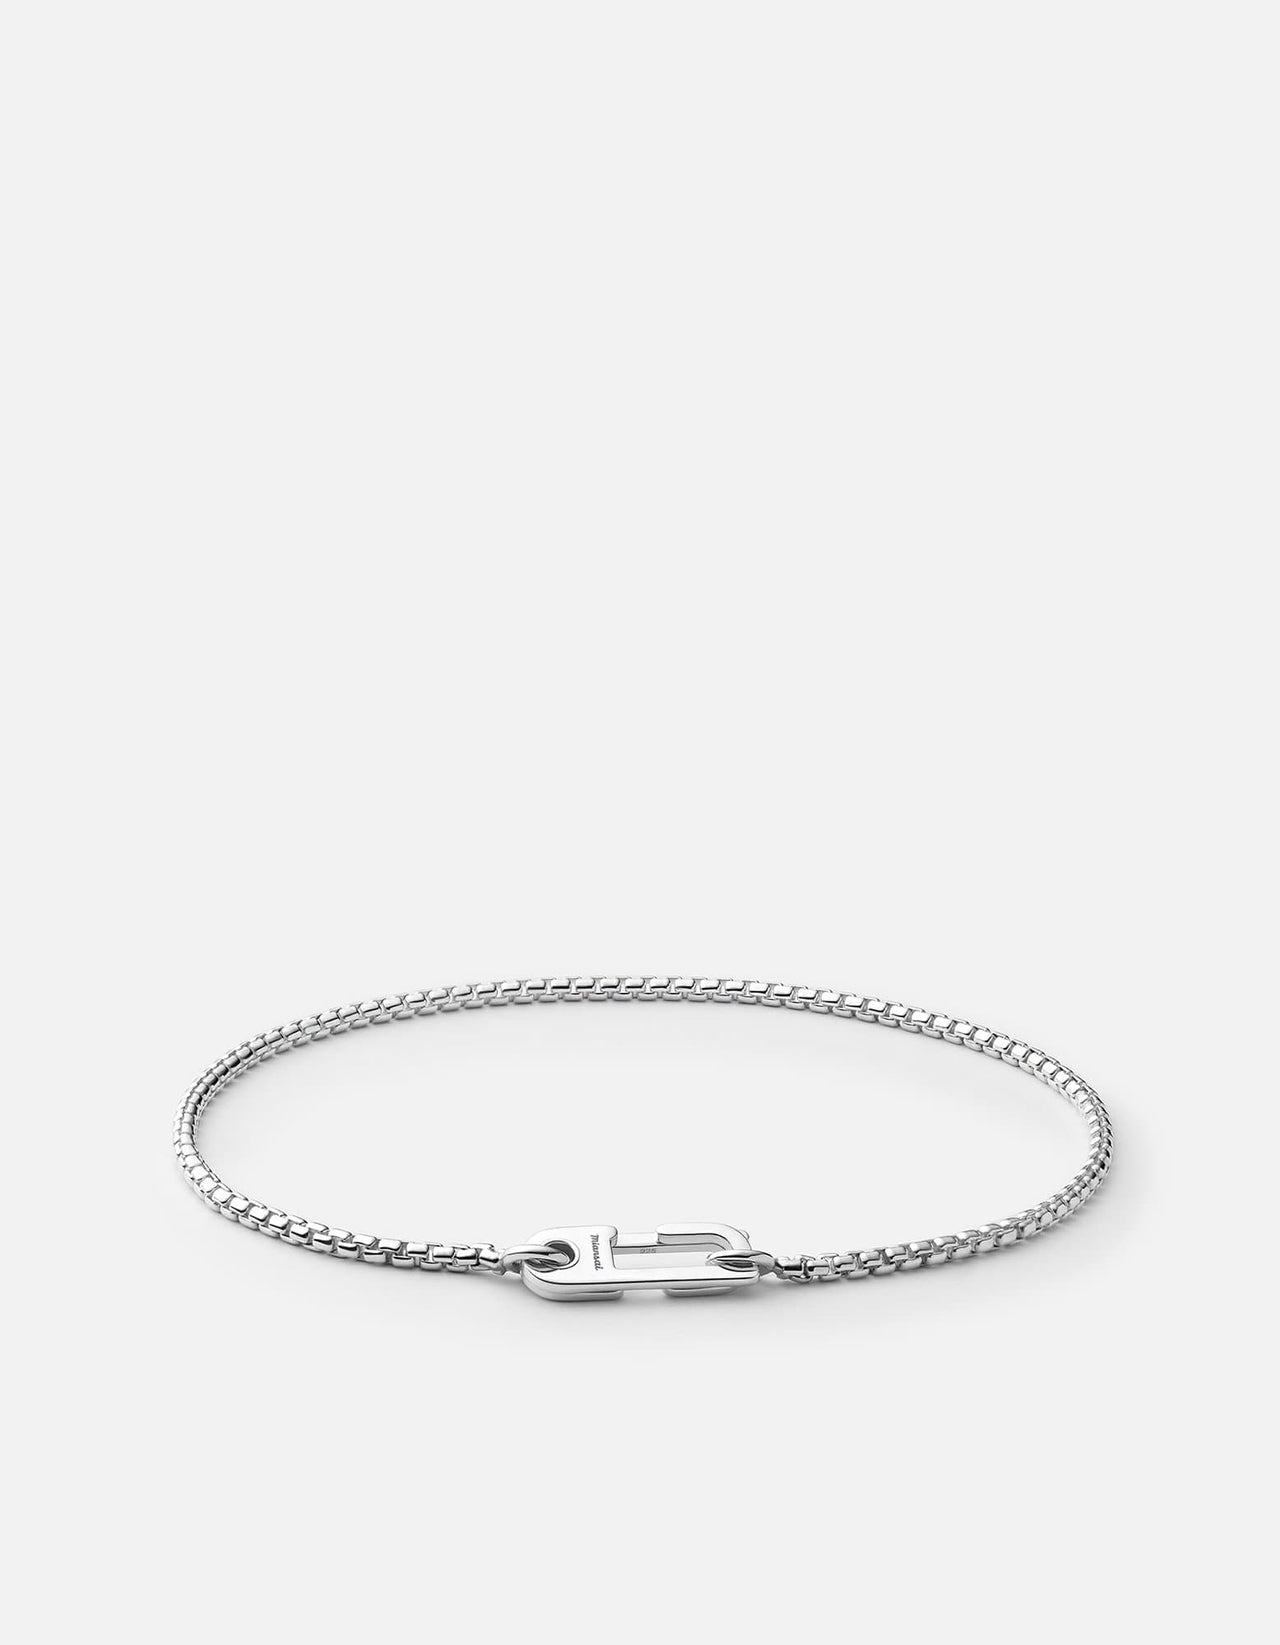 Miansai Men's Lynx Chain Necklace, Sterling Silver, Size 21 in.